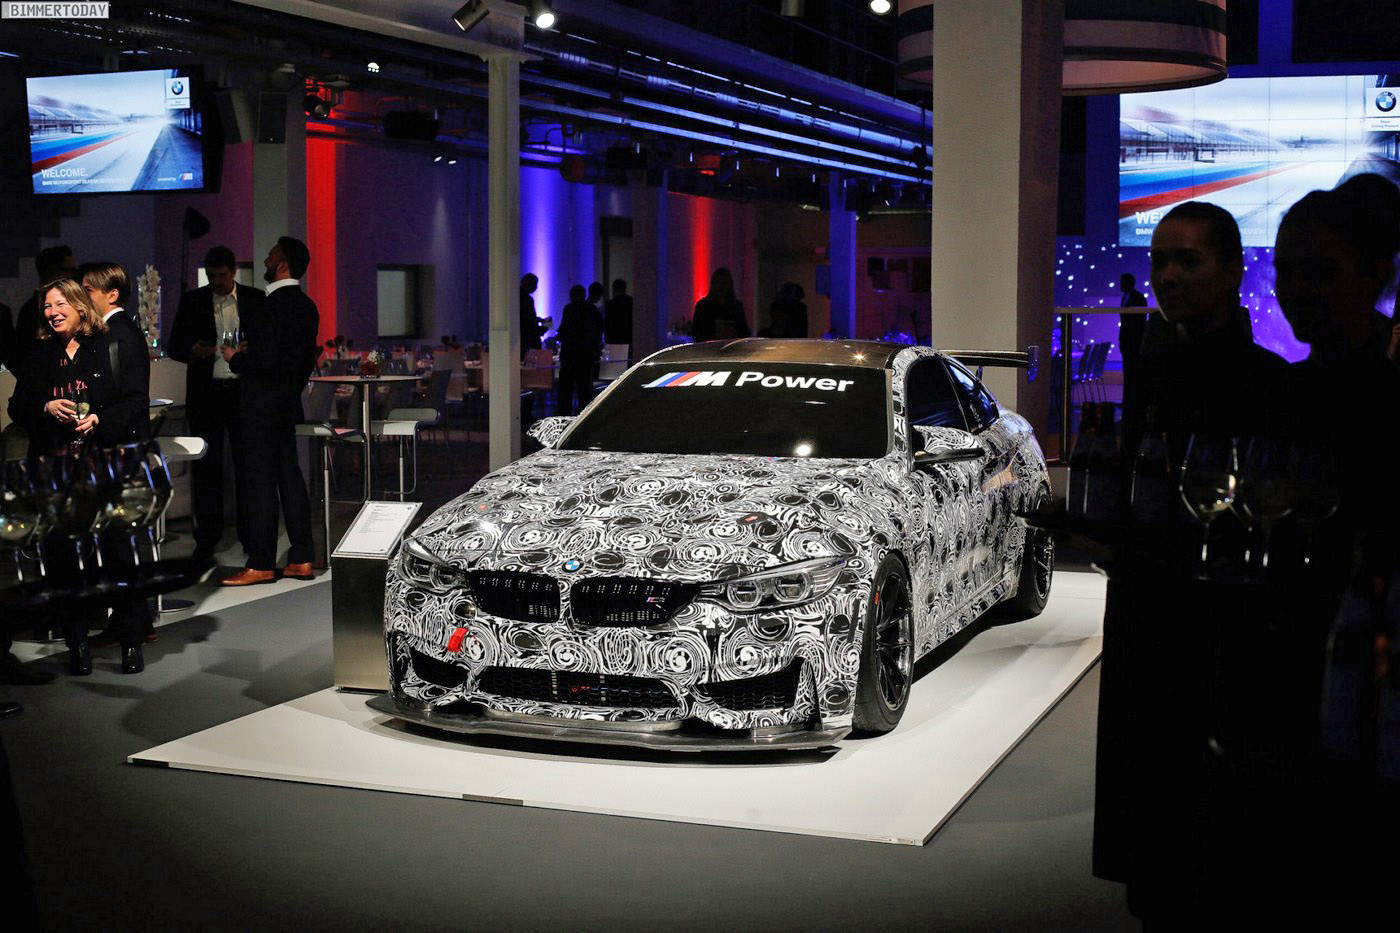 Bmw forum. БМВ 14. Гонки машина BMW x5. БМВ из последних выставок. BMW News.